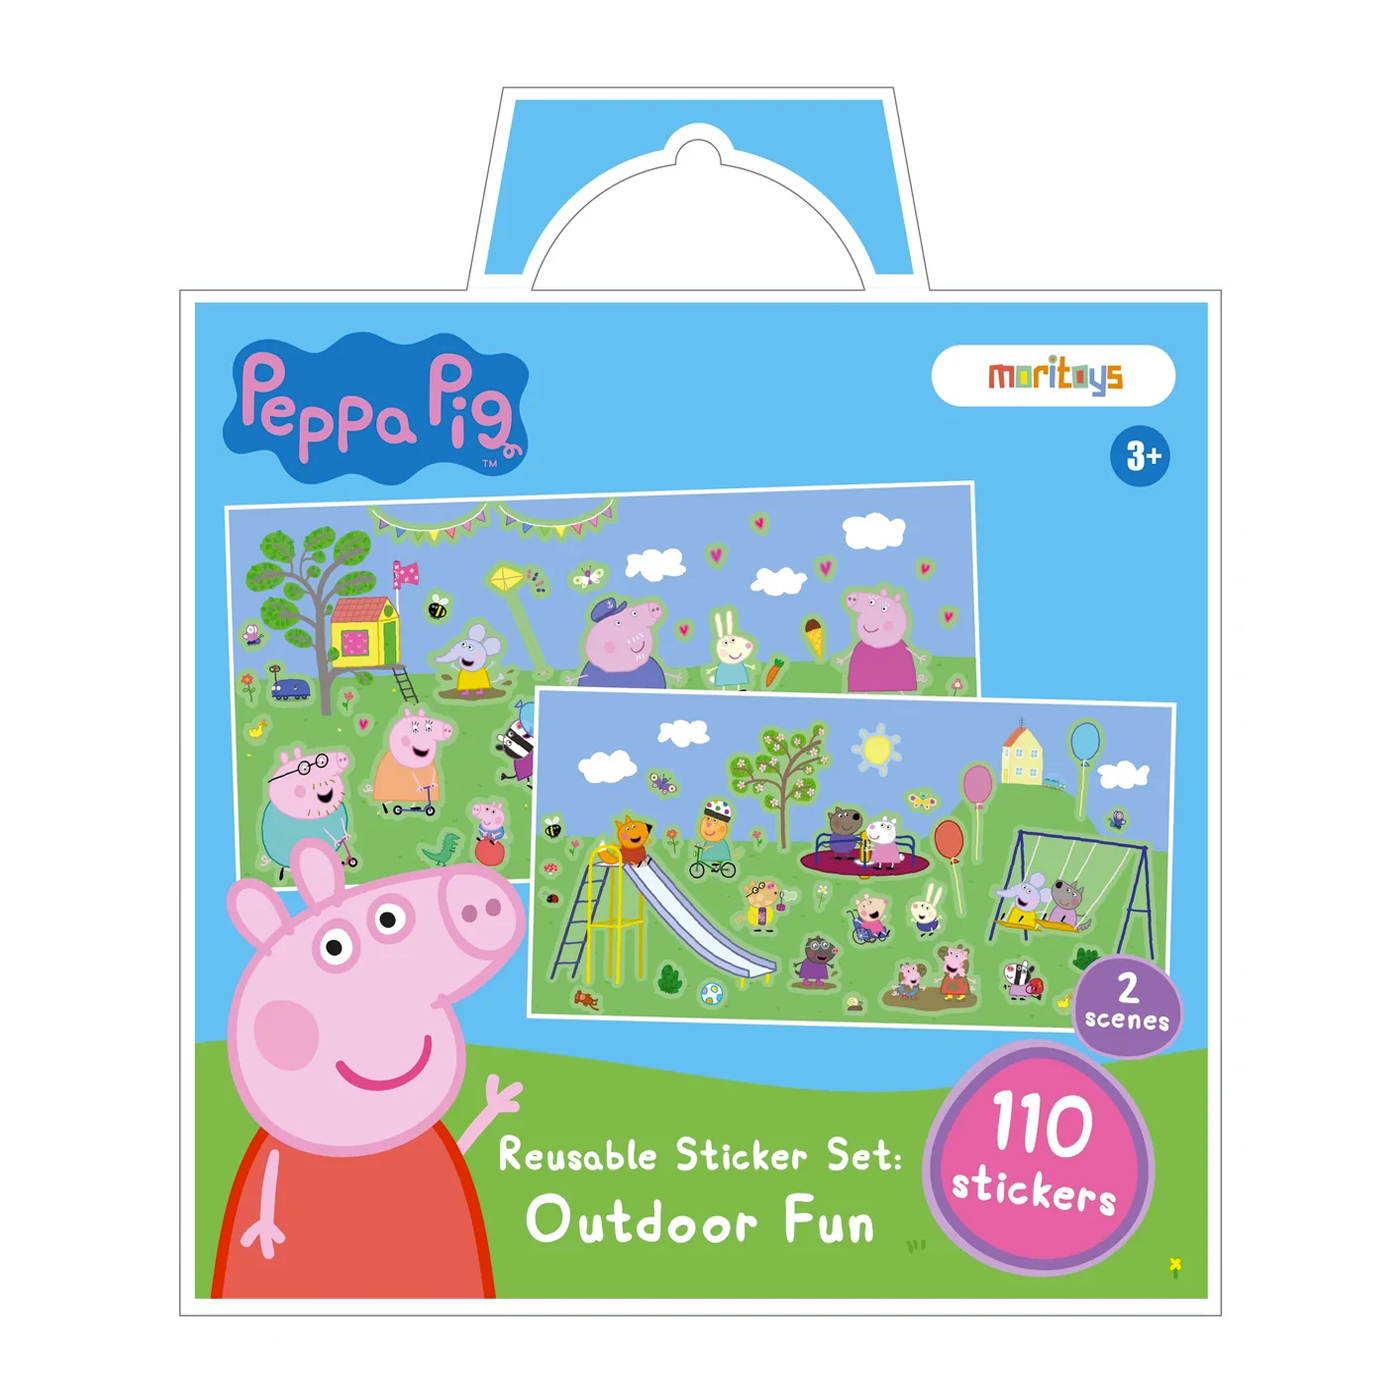  Peppa Pig: Reusable Sticker Set Outdoor Fun - 110 Çıkartma 2 Sahne